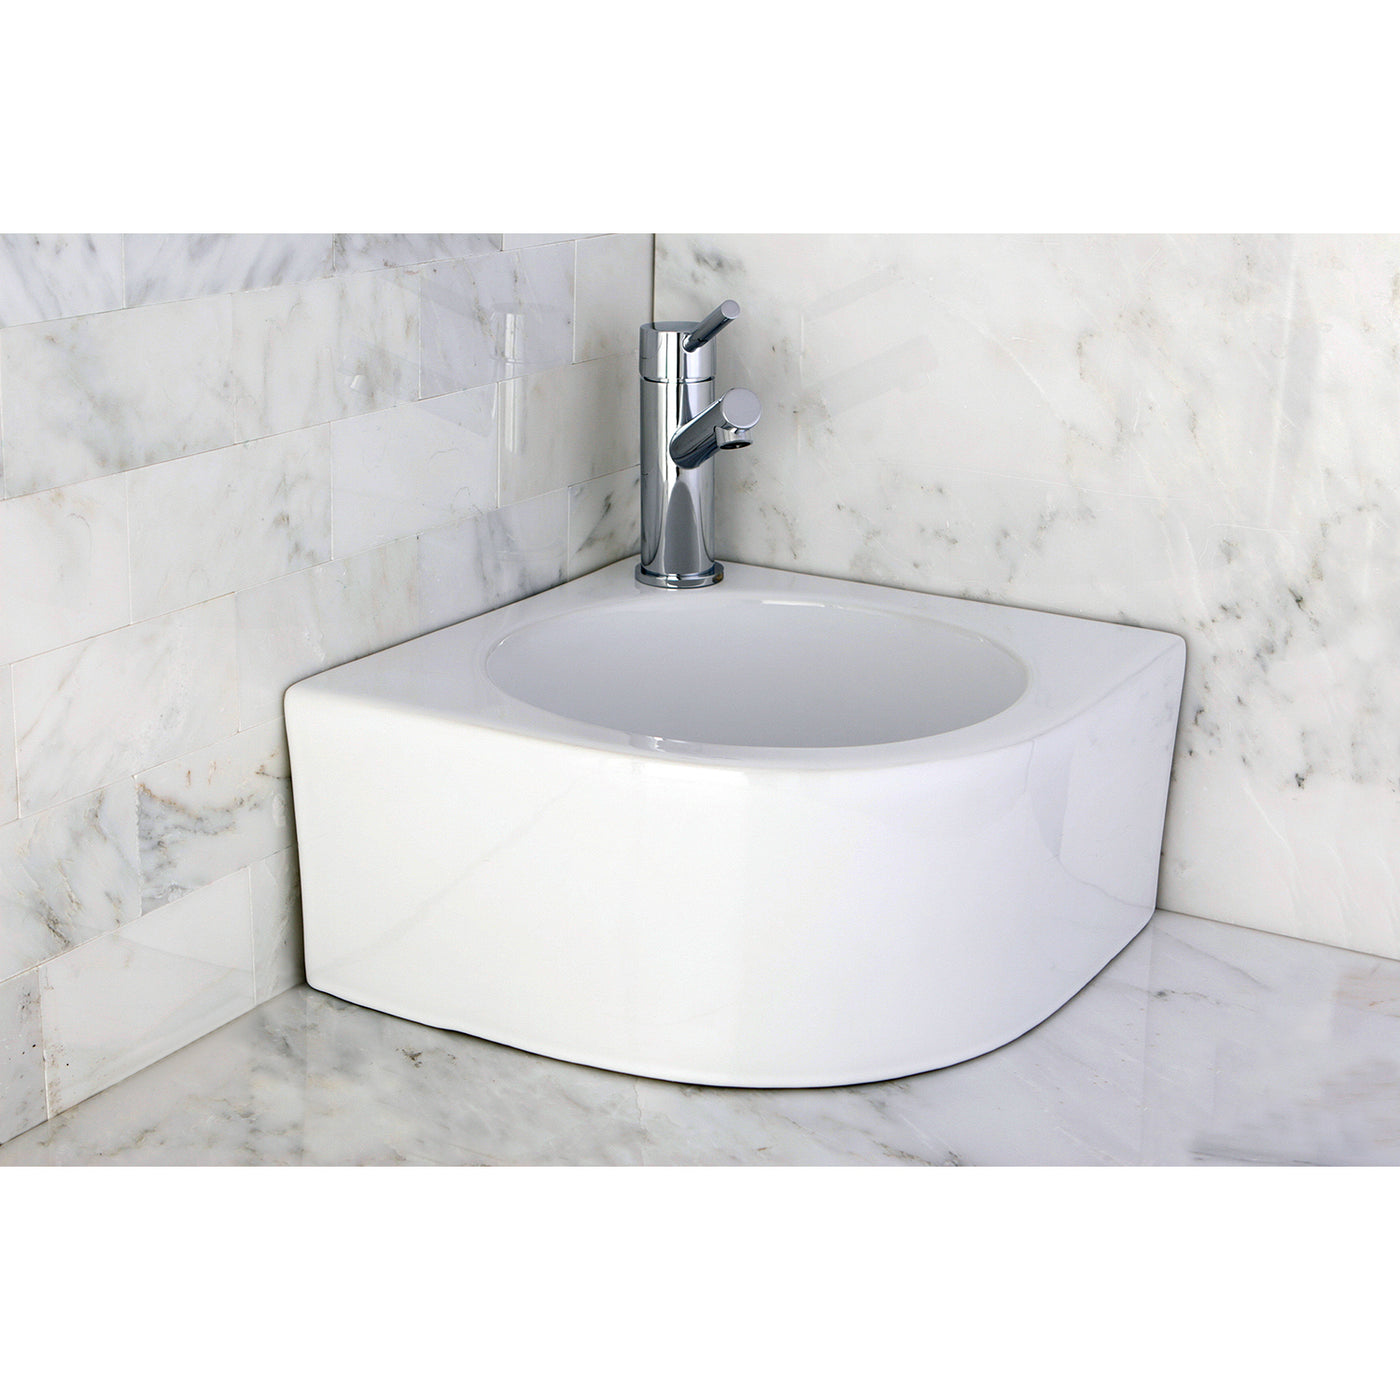 Elements of Design EDV1094 Ceramic Corner Bathroom Sink, White